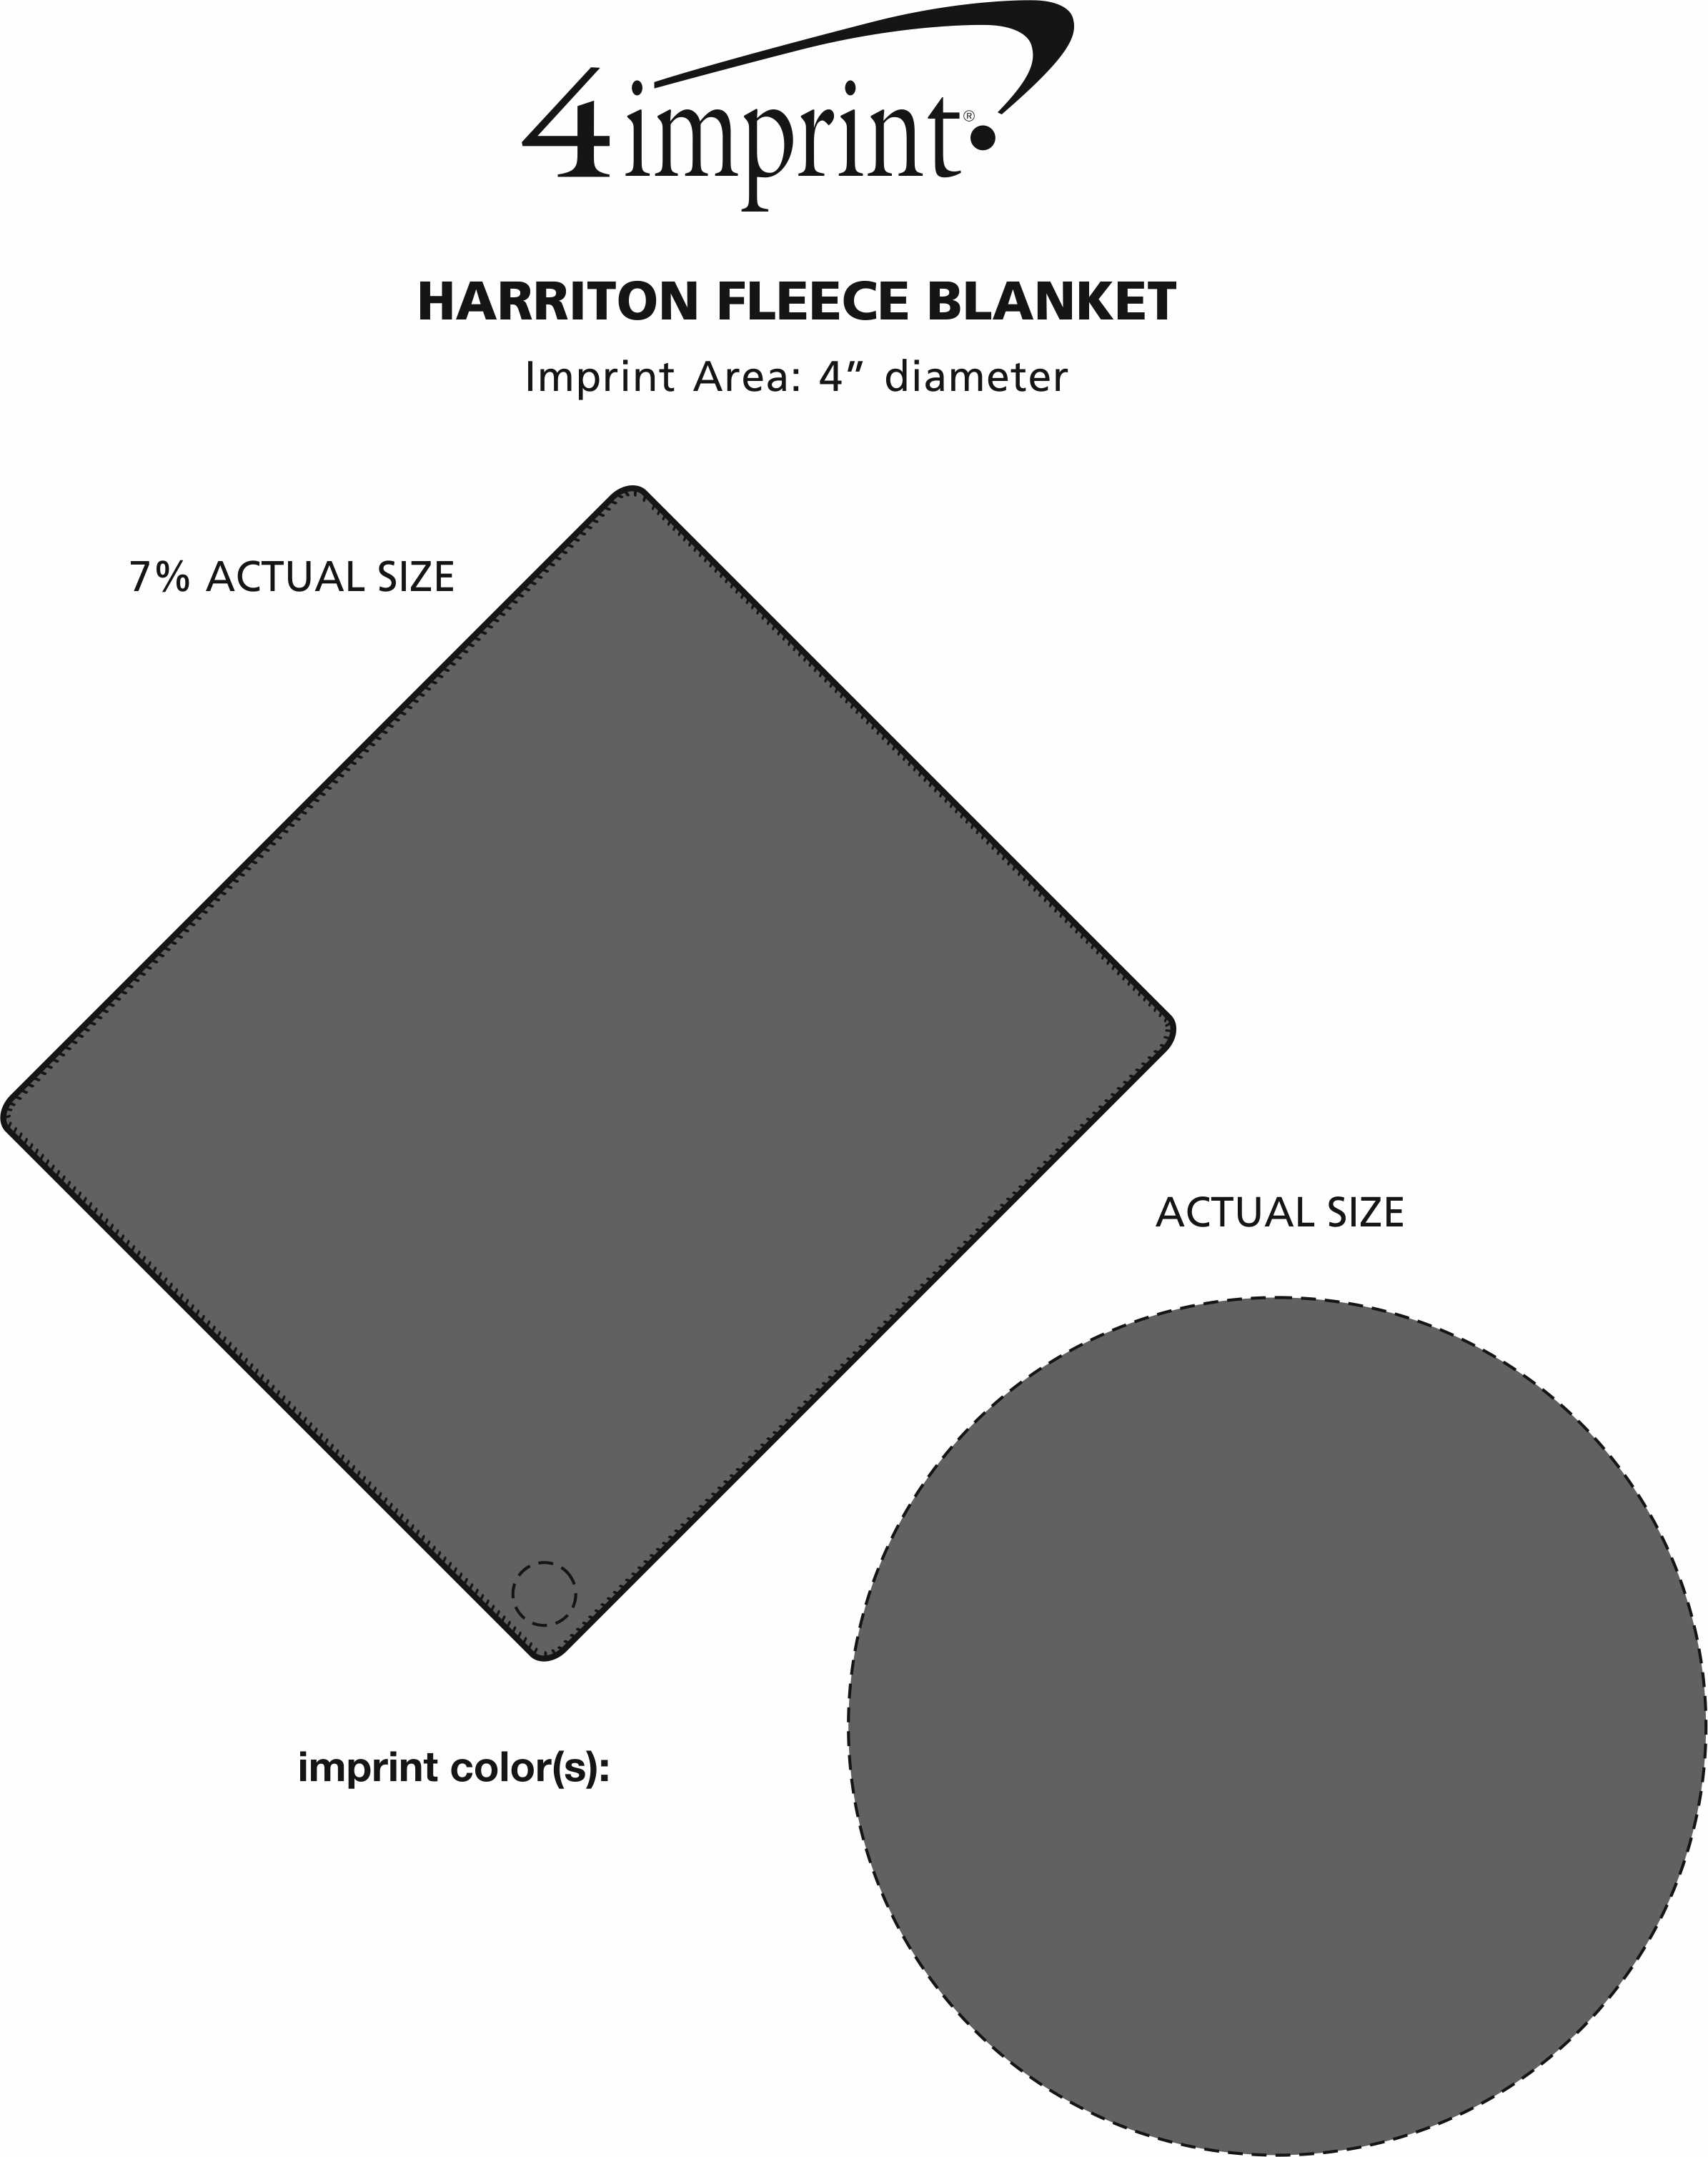 Imprint Area of Harriton Fleece Blanket